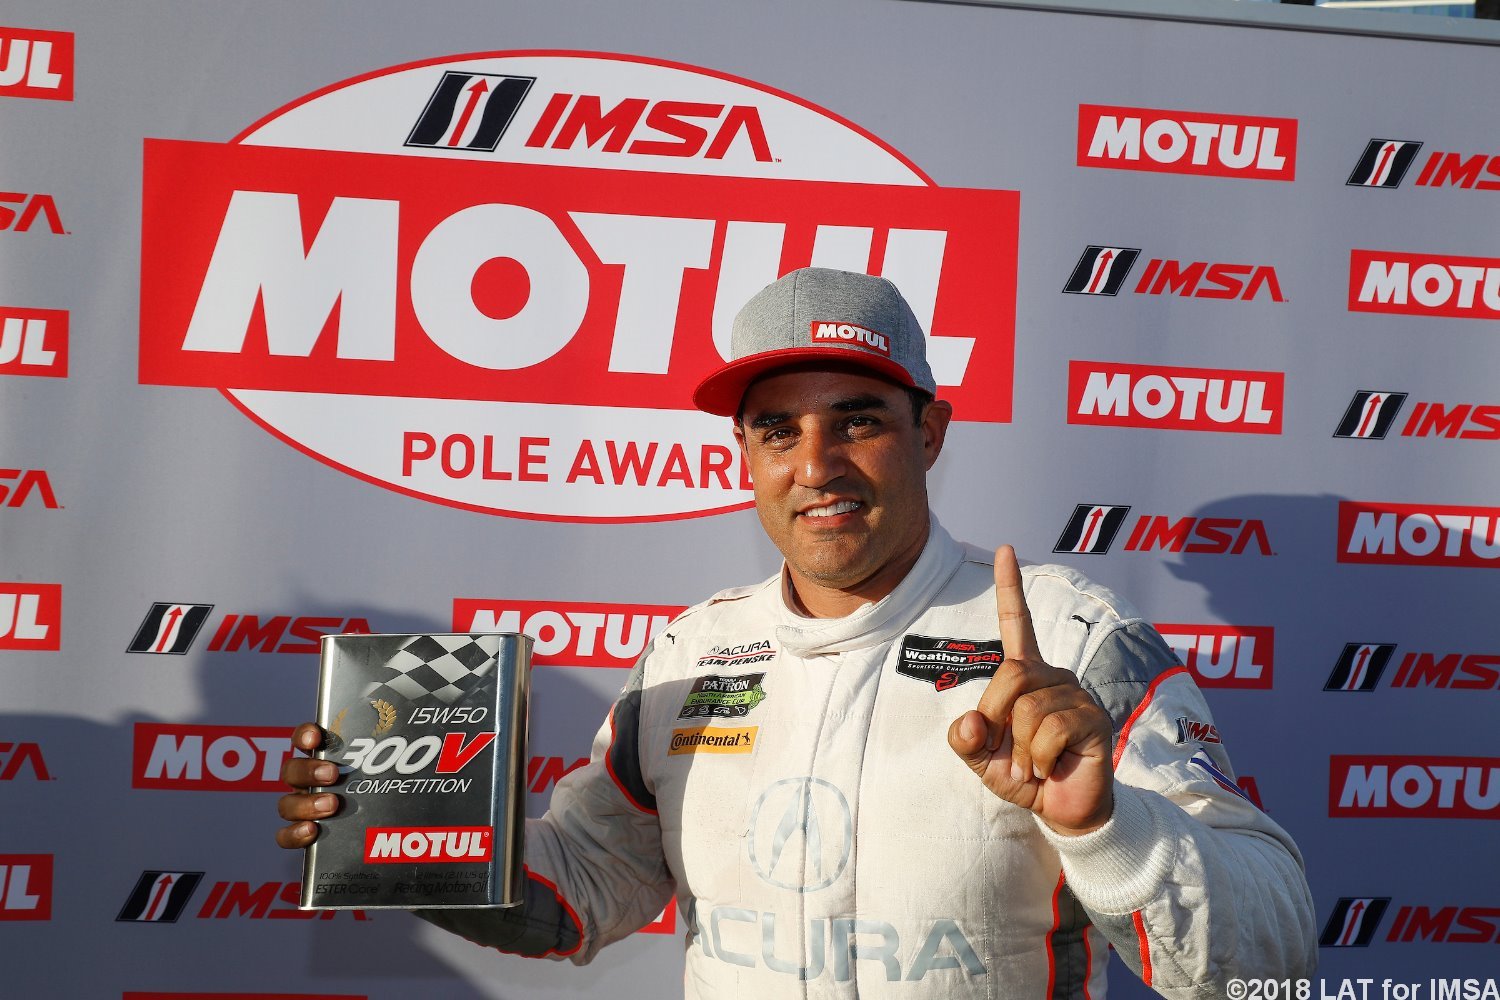 Juan Montoya put the Acura on pole last year